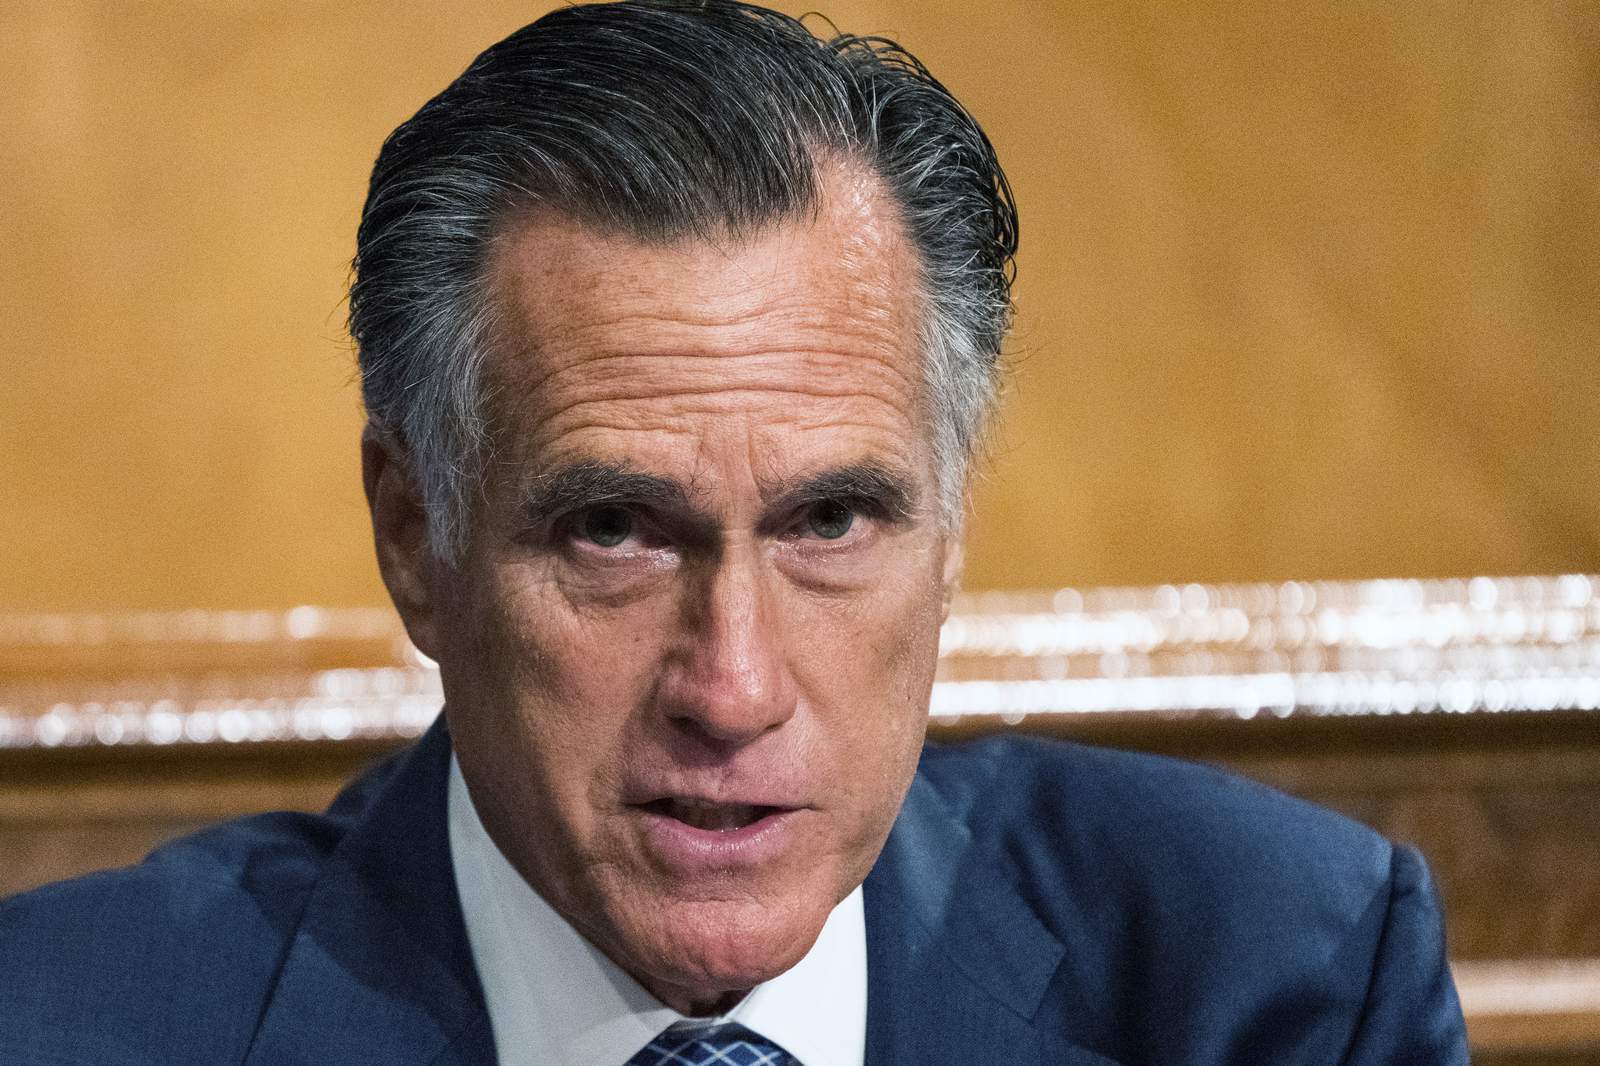 Romney says Biden probe 'not legitimate role of government'